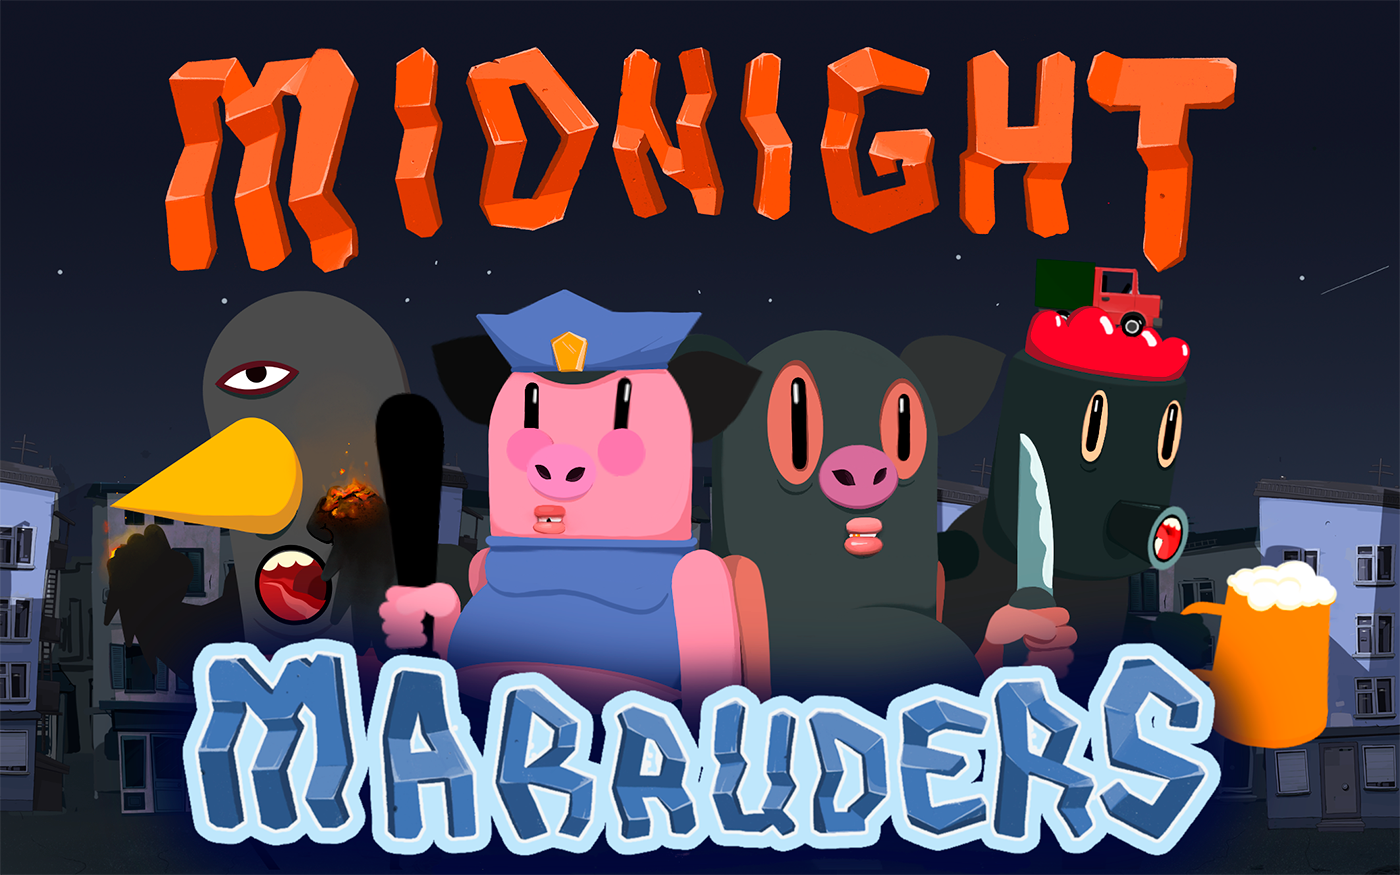 cartoon characterdesign animated madewithspine Spine2d gamedev 2D spine Marauders midnight marauders